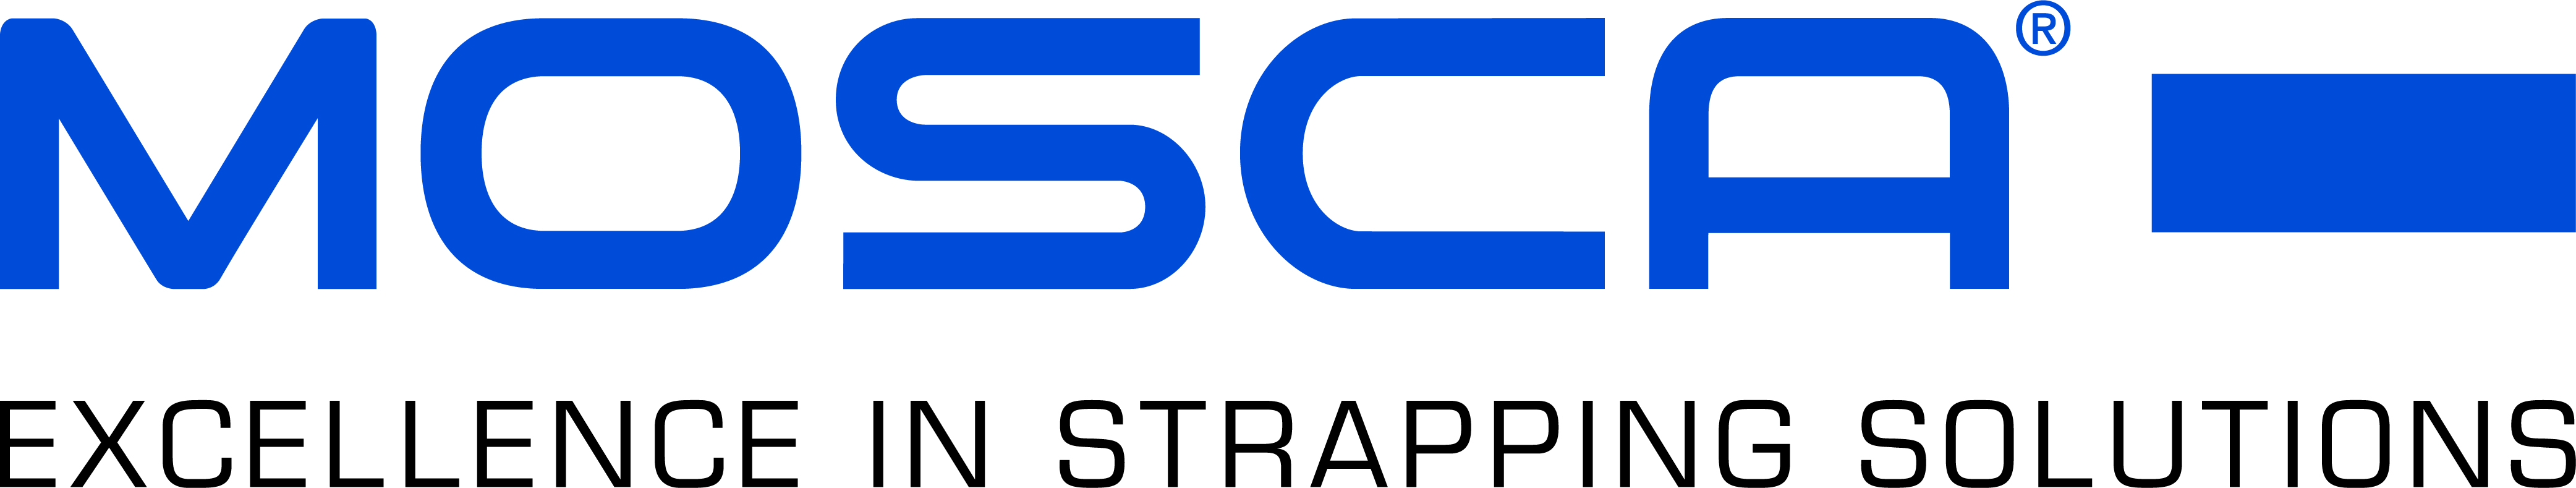 03 1804 MOSCA Logo 4c mit Unterzeile 300dpi cymk